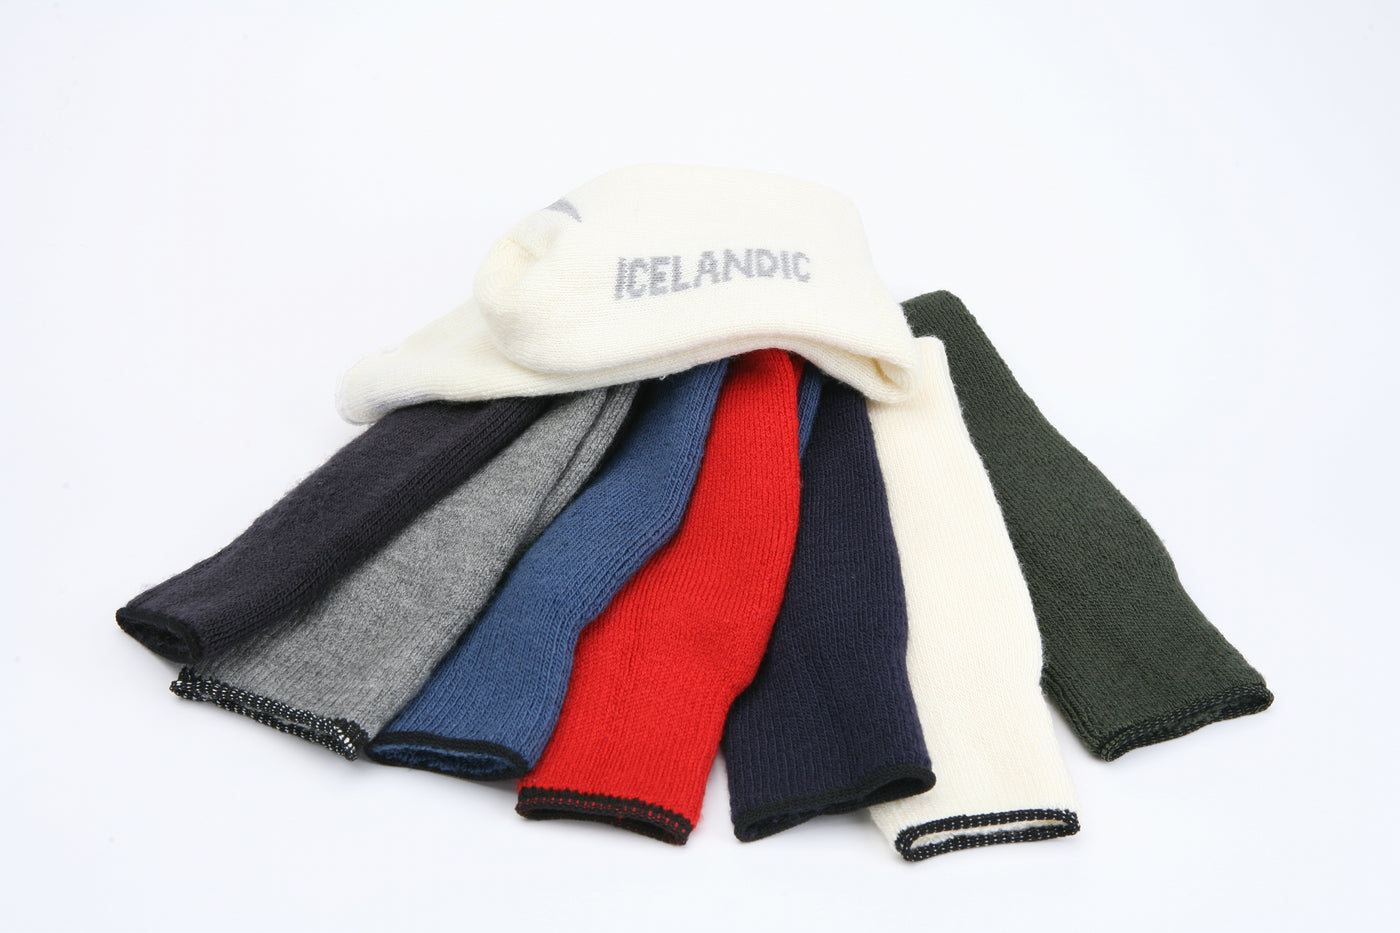 3 PAIR - J.B. Field's Icelandic "30 Below Classic" Merino Wool Thermal Socks (SLIGHTLY IMPERFECT)